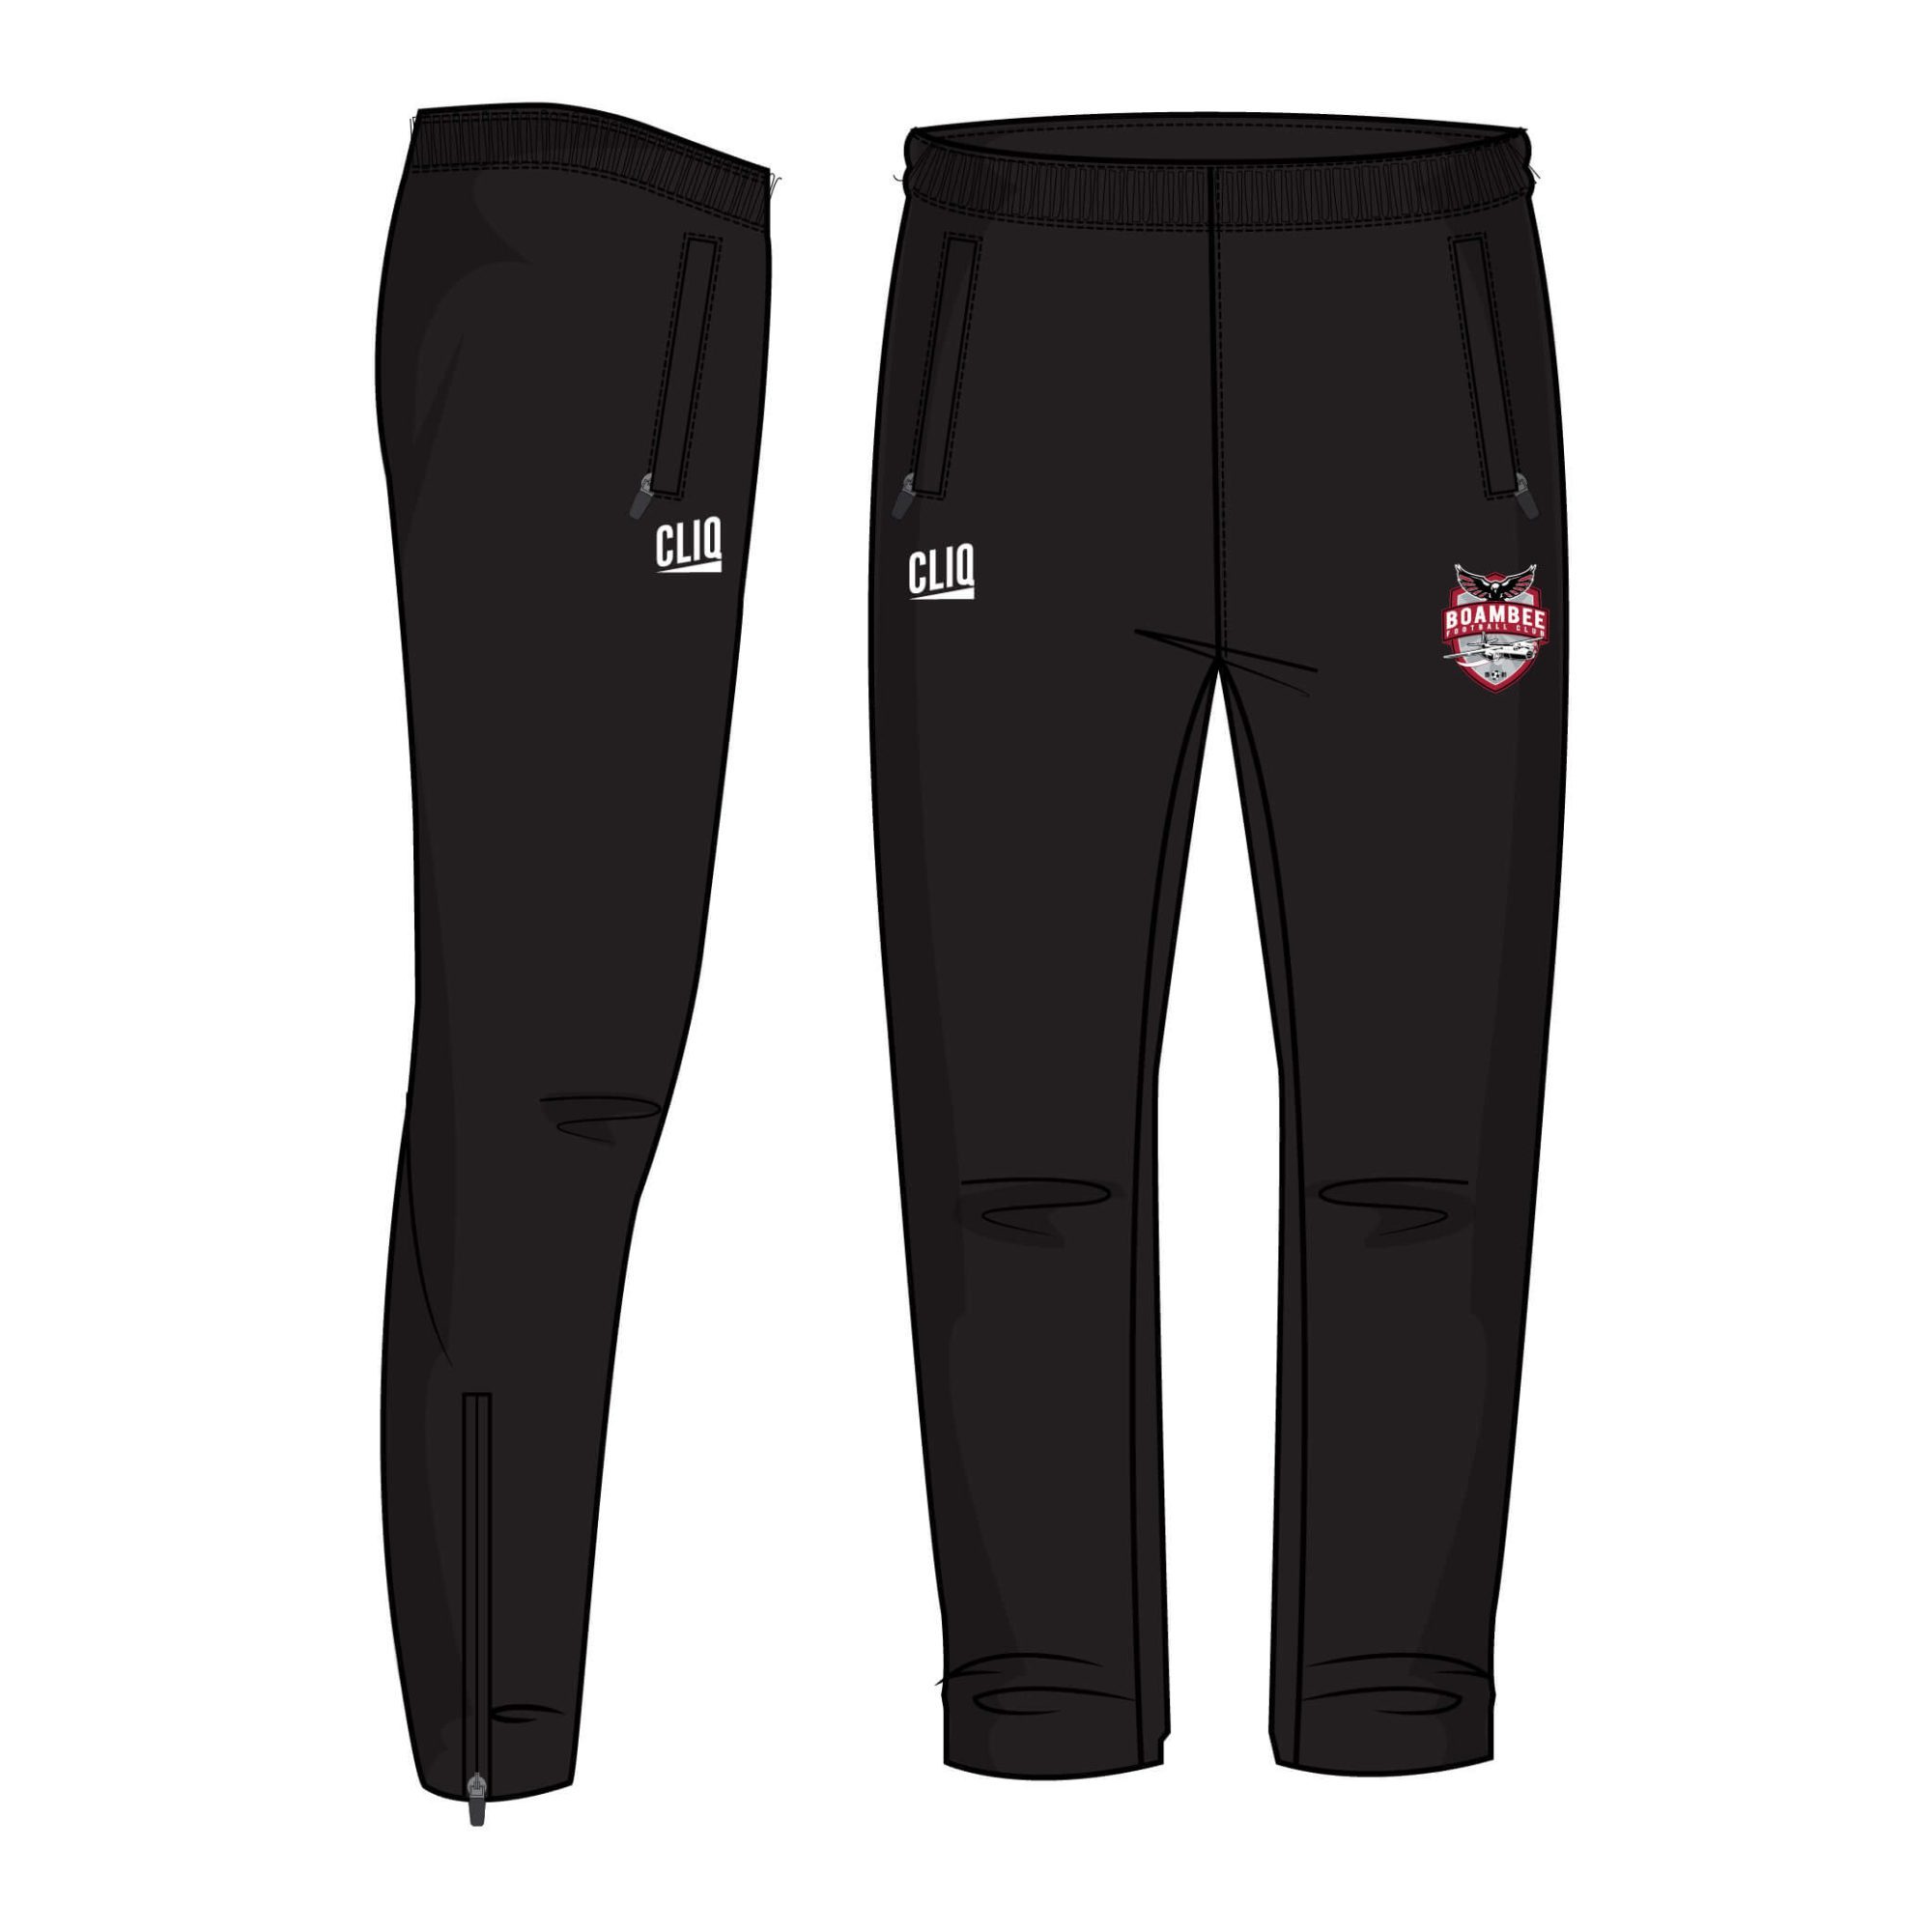 Cliq track pants with club logo - Sportsclique Shop